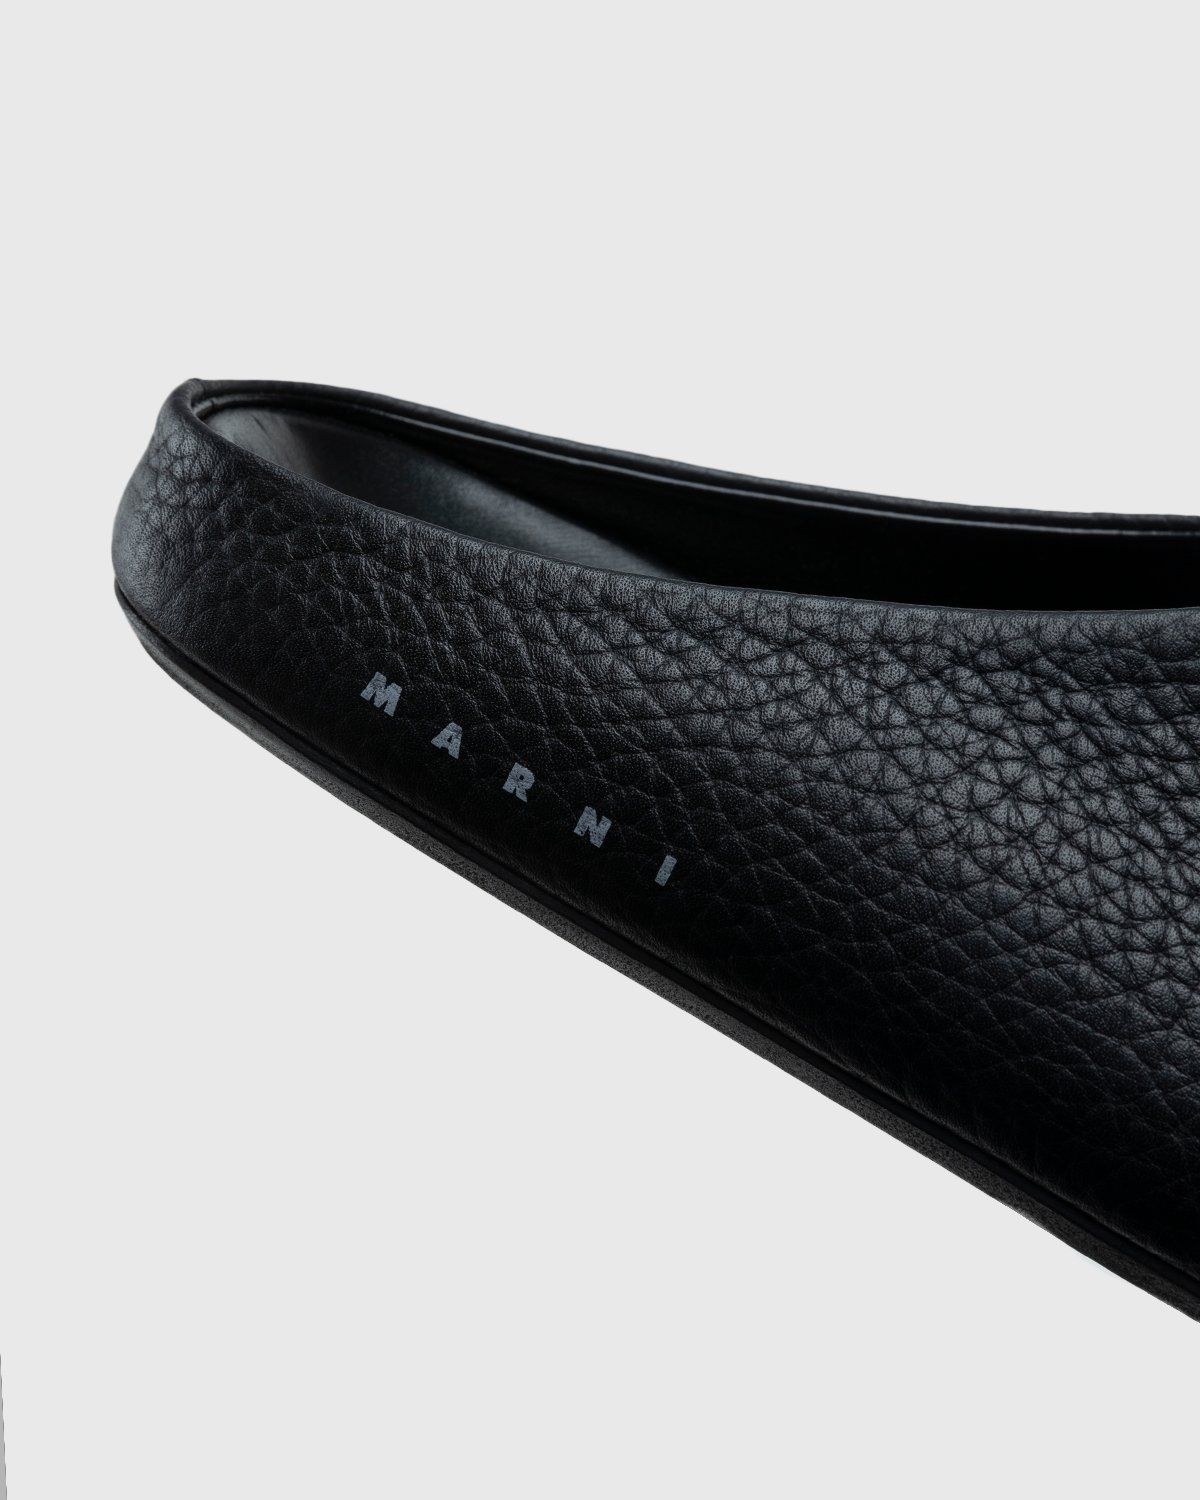 Marni – Calf Leather Mules Black - Image 6